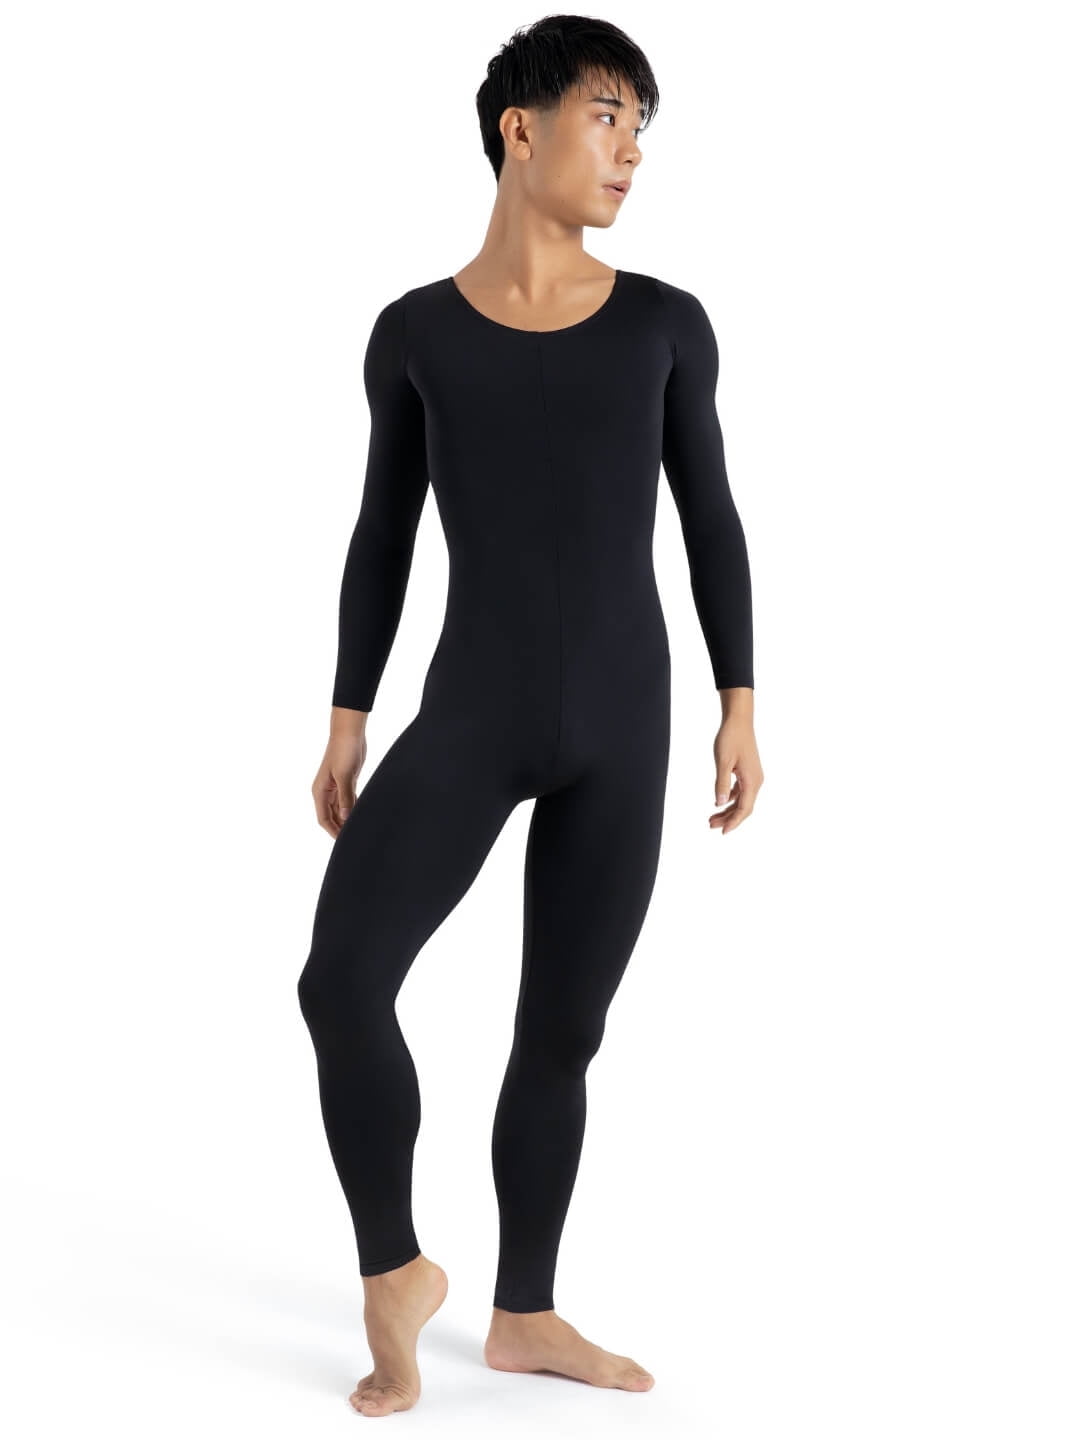  MSemis Woman's Glossy Spandex Full Bodysuit Catsuit Yoga Dance  Jumpsuit Round Neck Long Sleeve Body Stocking Black Medium: Clothing, Shoes  & Jewelry